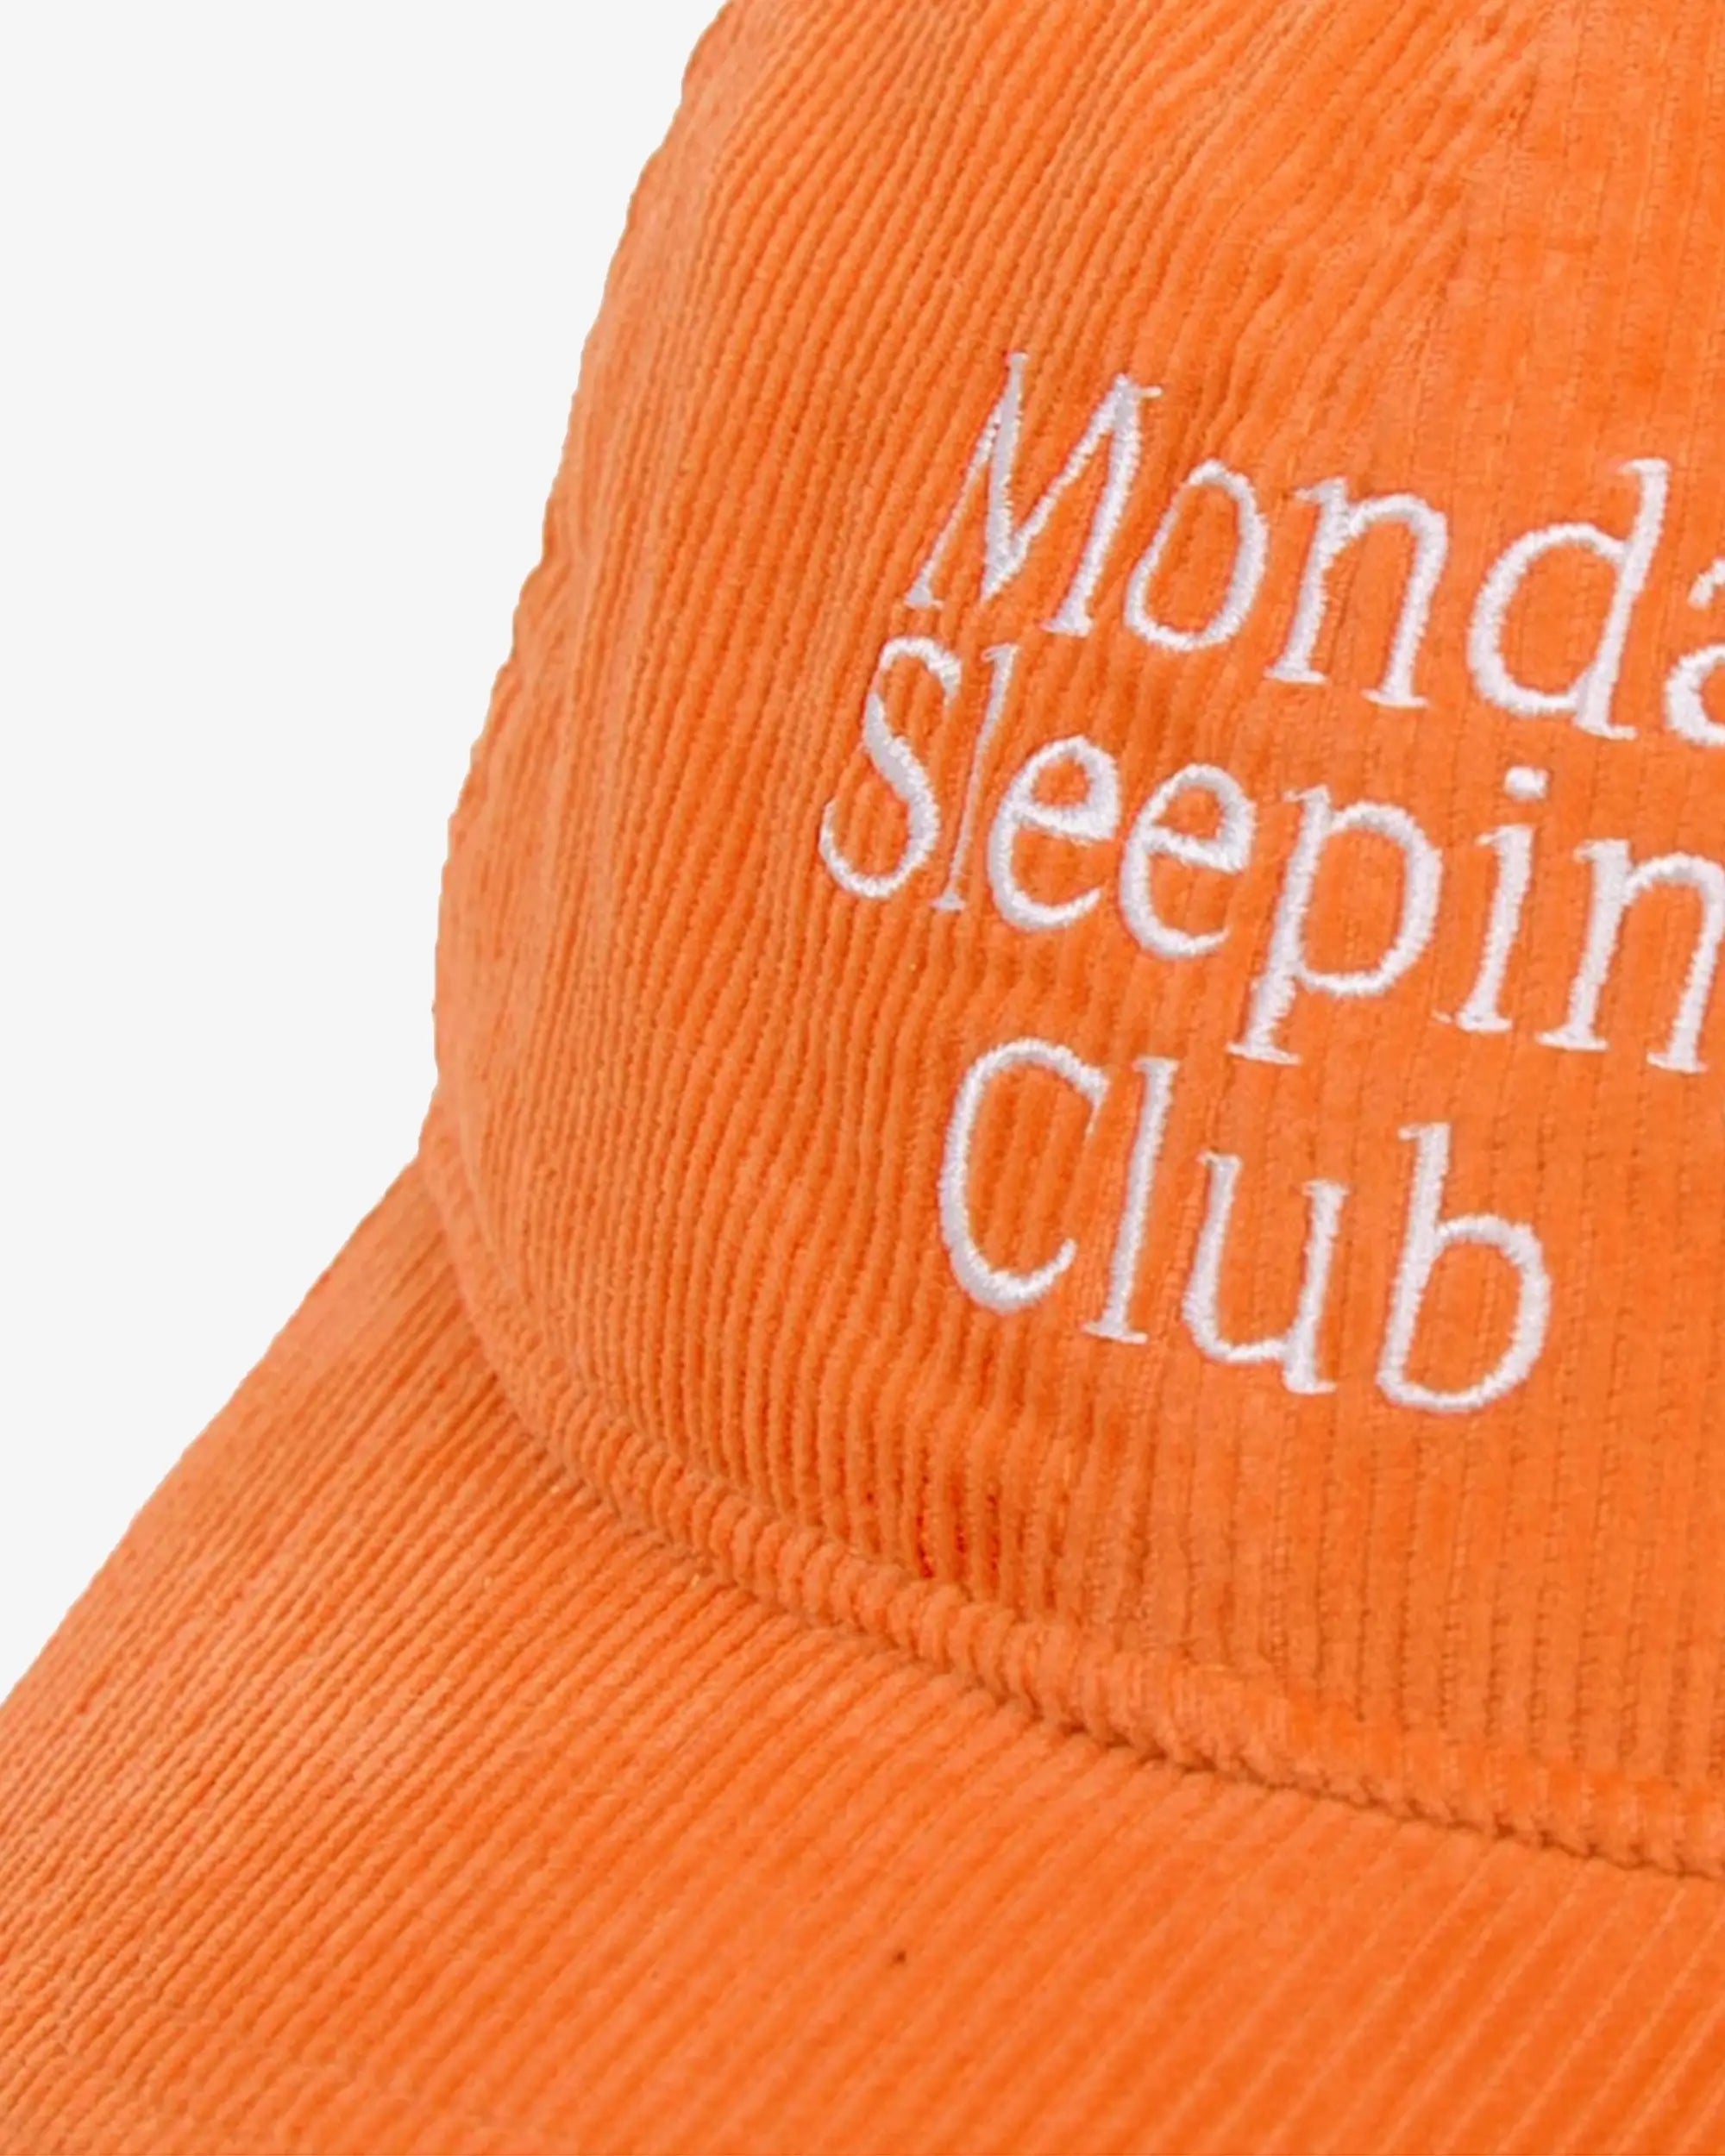 Monday Sleeping Club Corduroy Standard Logo Embroidered Baseball Cap